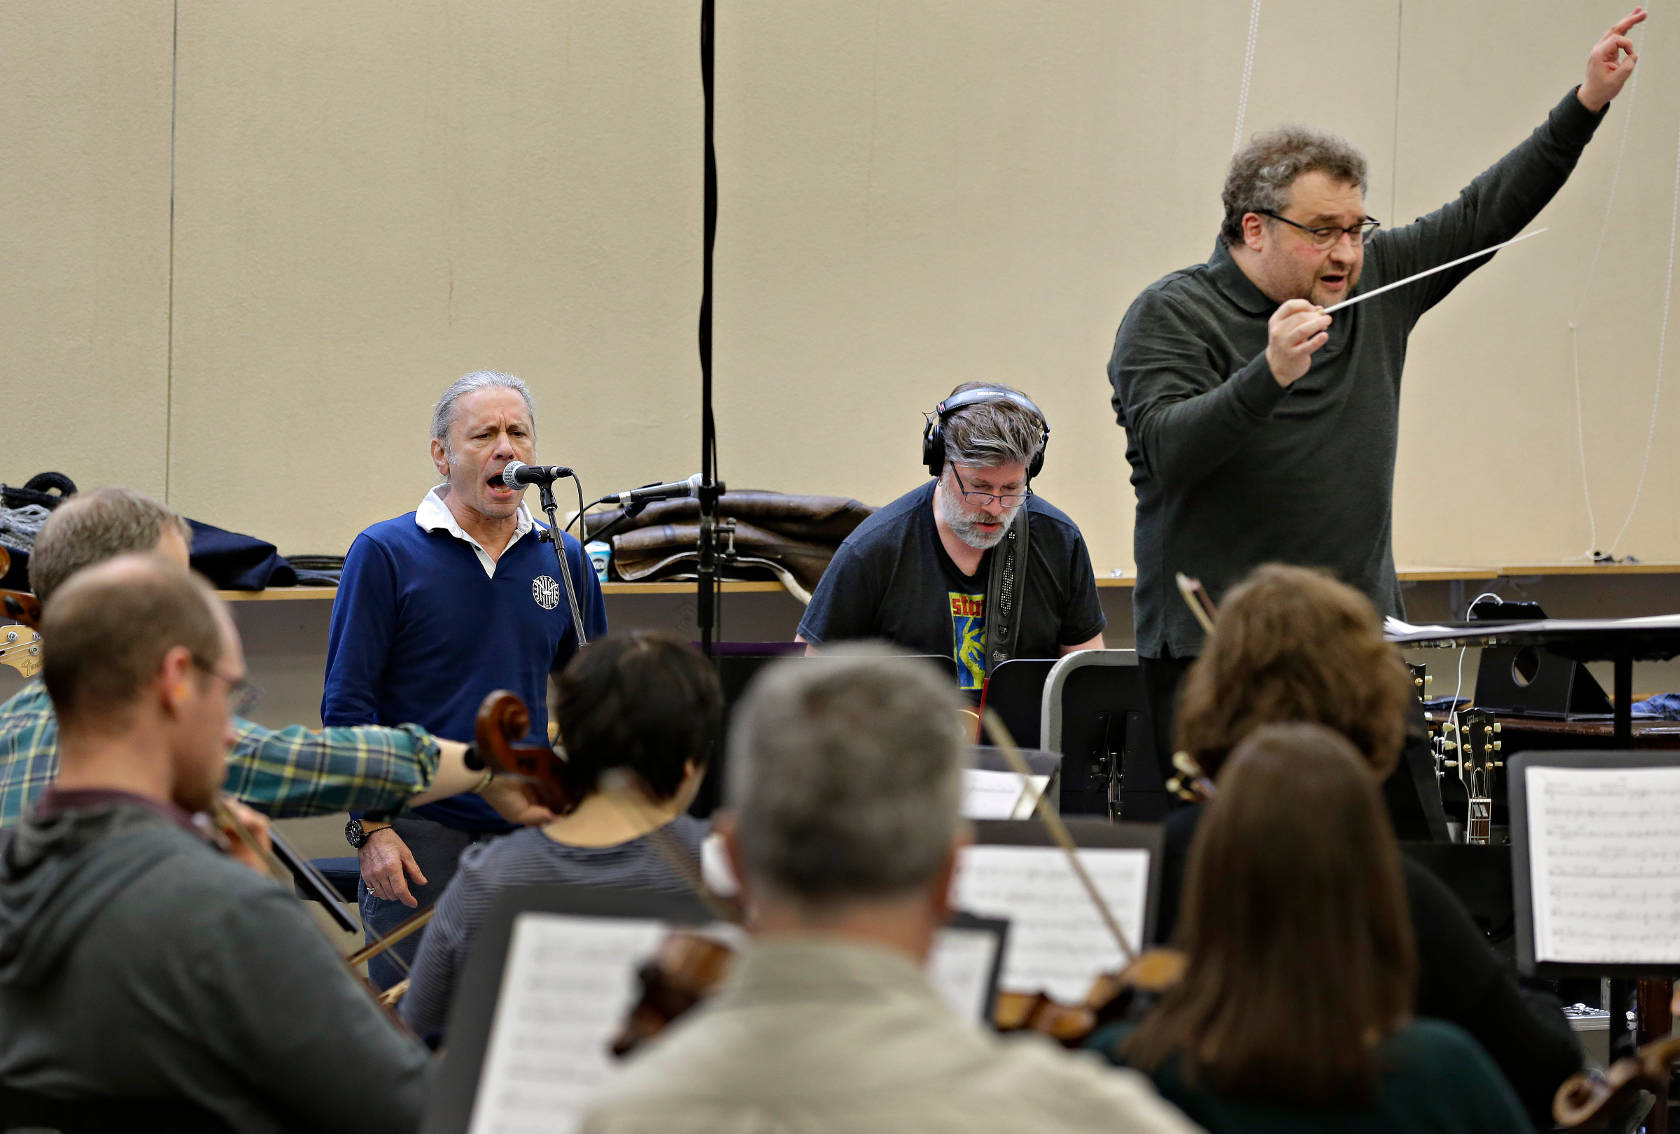 Orchestra bruce Mann rehearsal